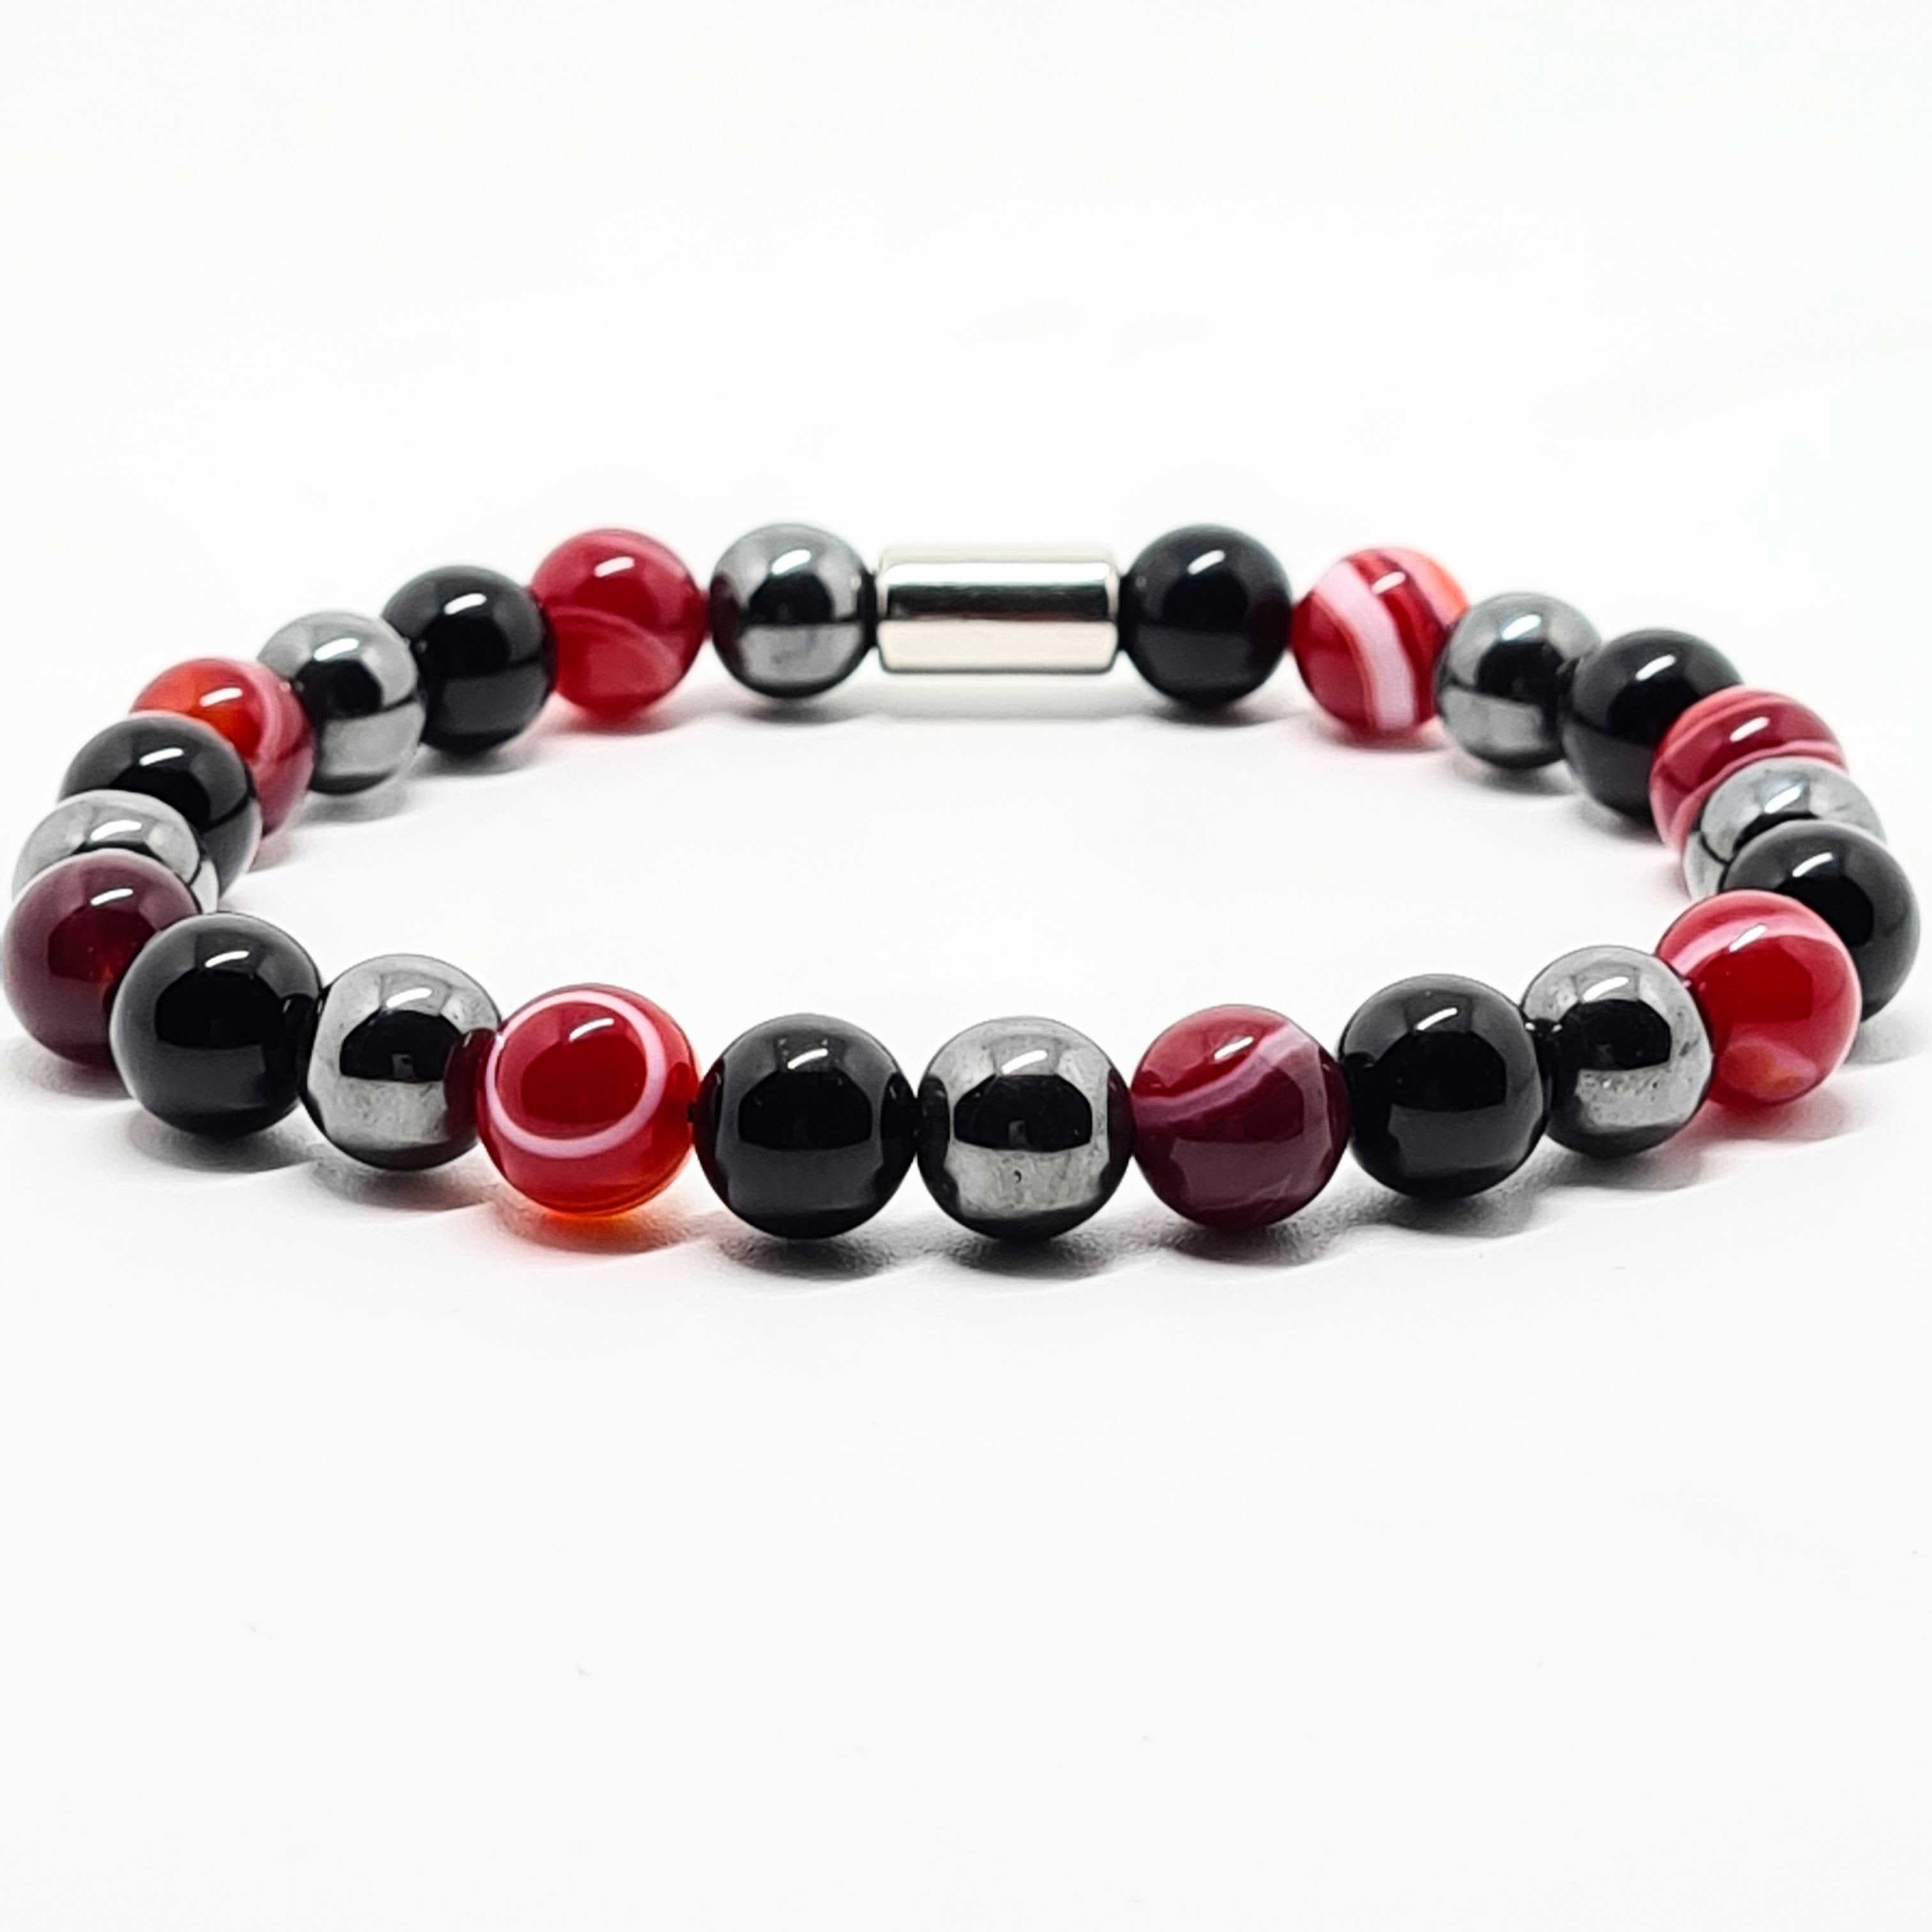 Red Agate Hematite and Black Onyx Energy Gemstone Bracelet